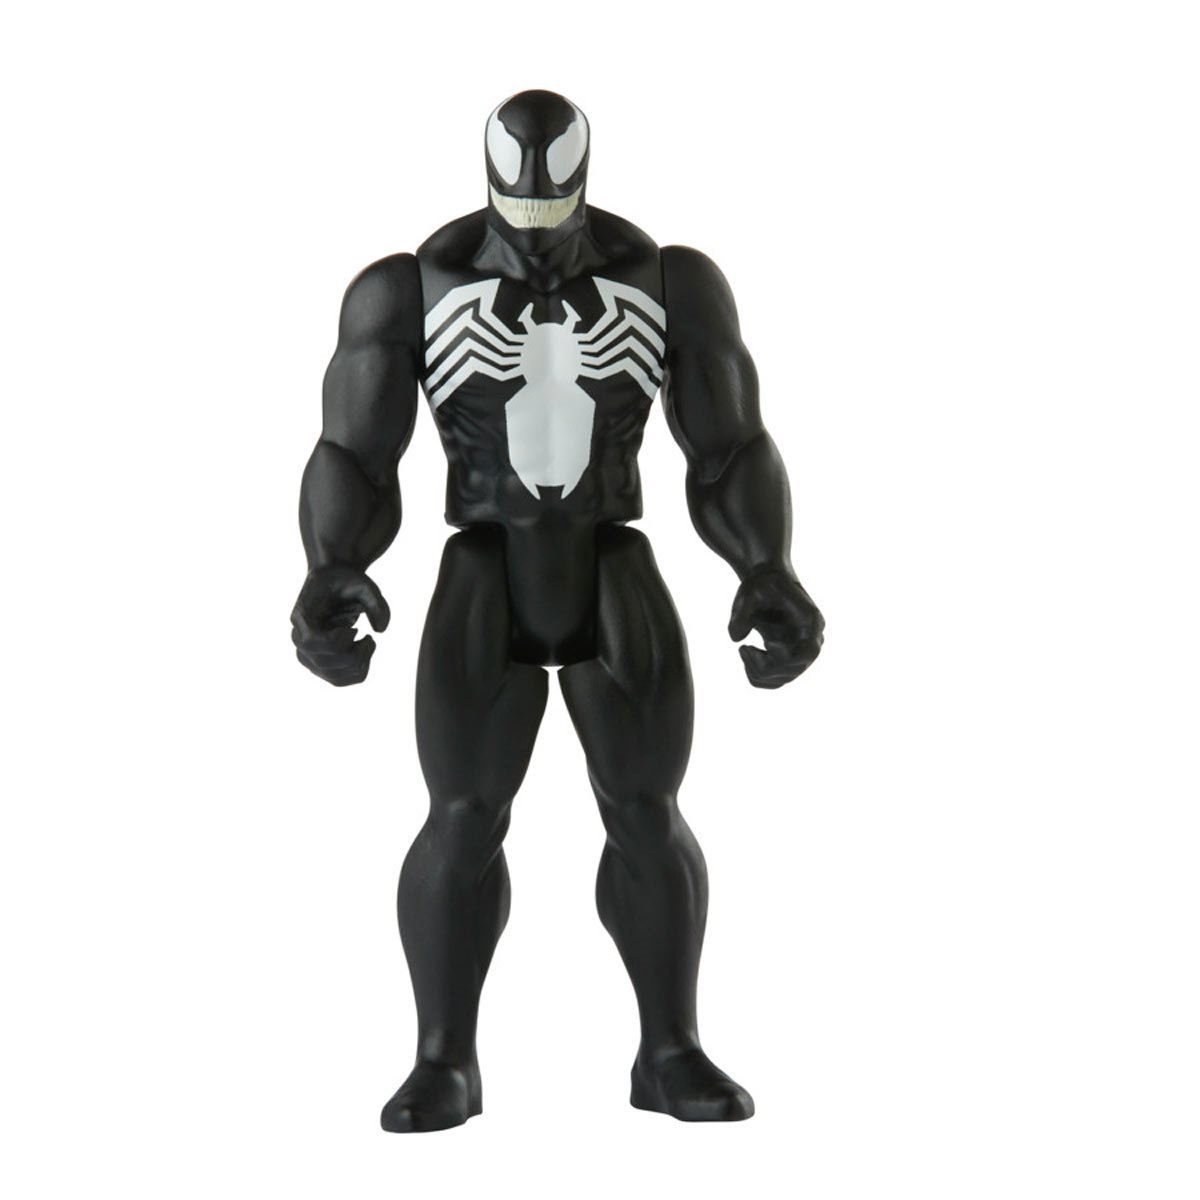 Marvel Legends Retro 375 Collection Venom Action Figure